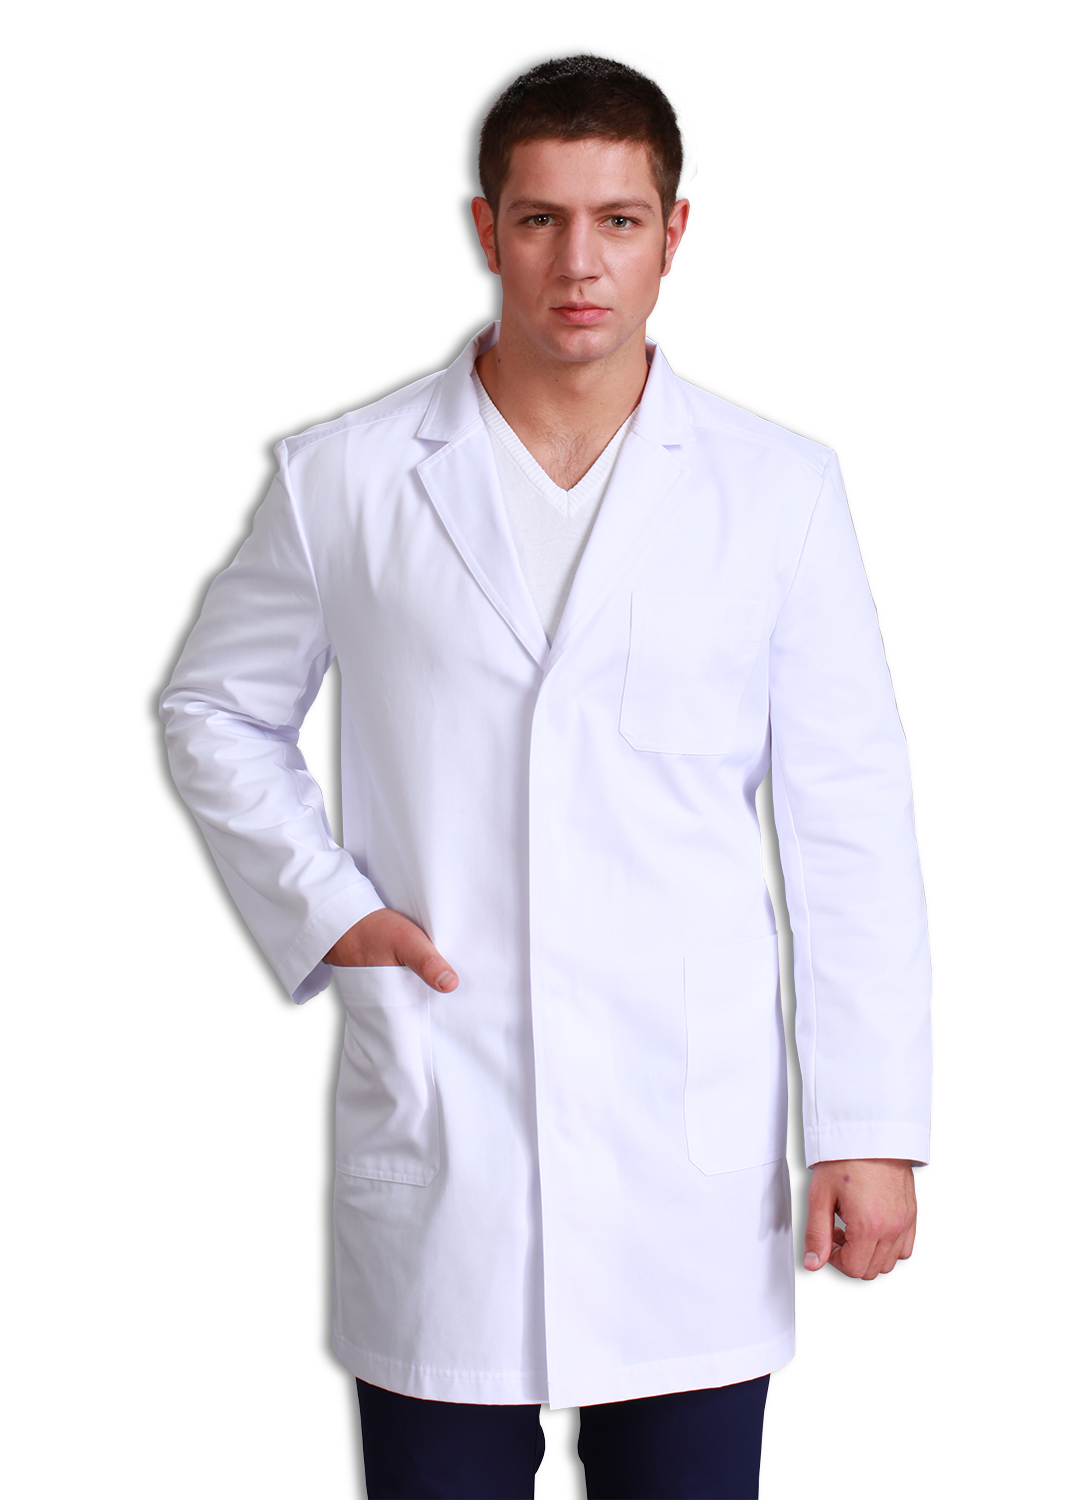 Белый халат медицинский мужской. Халат медицинский мужской. Доктор в халате. Докторский халат.